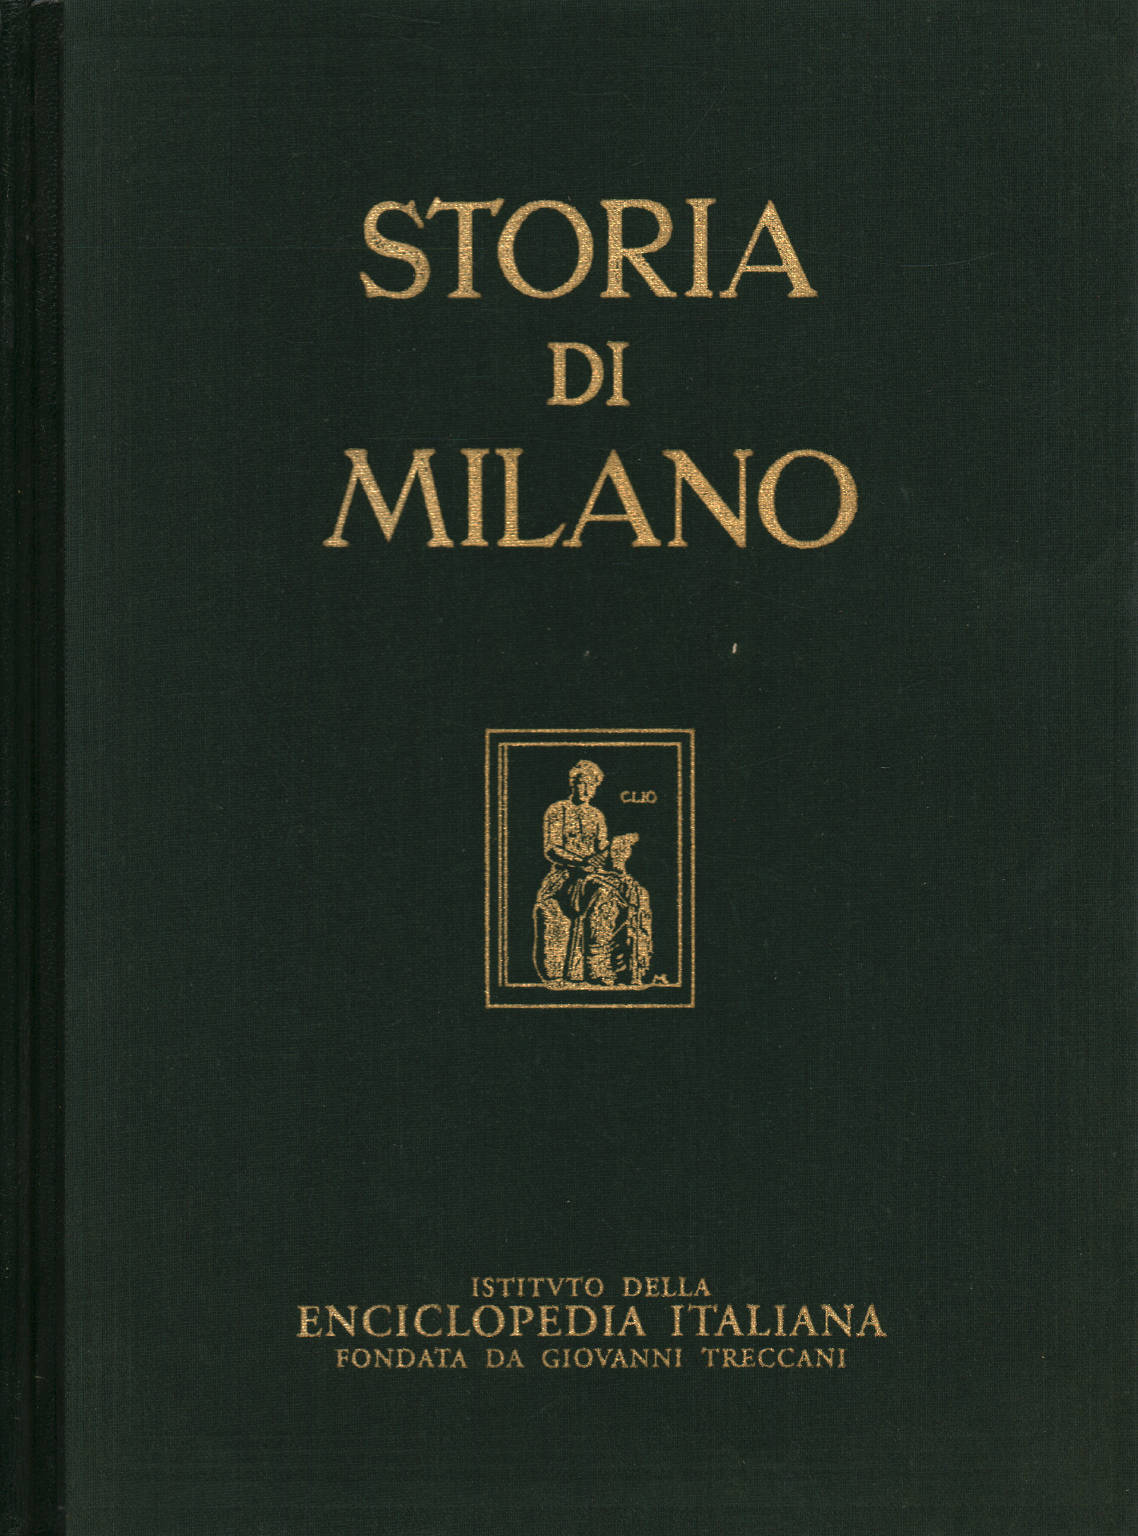 History of Milan (Volume XVIII)